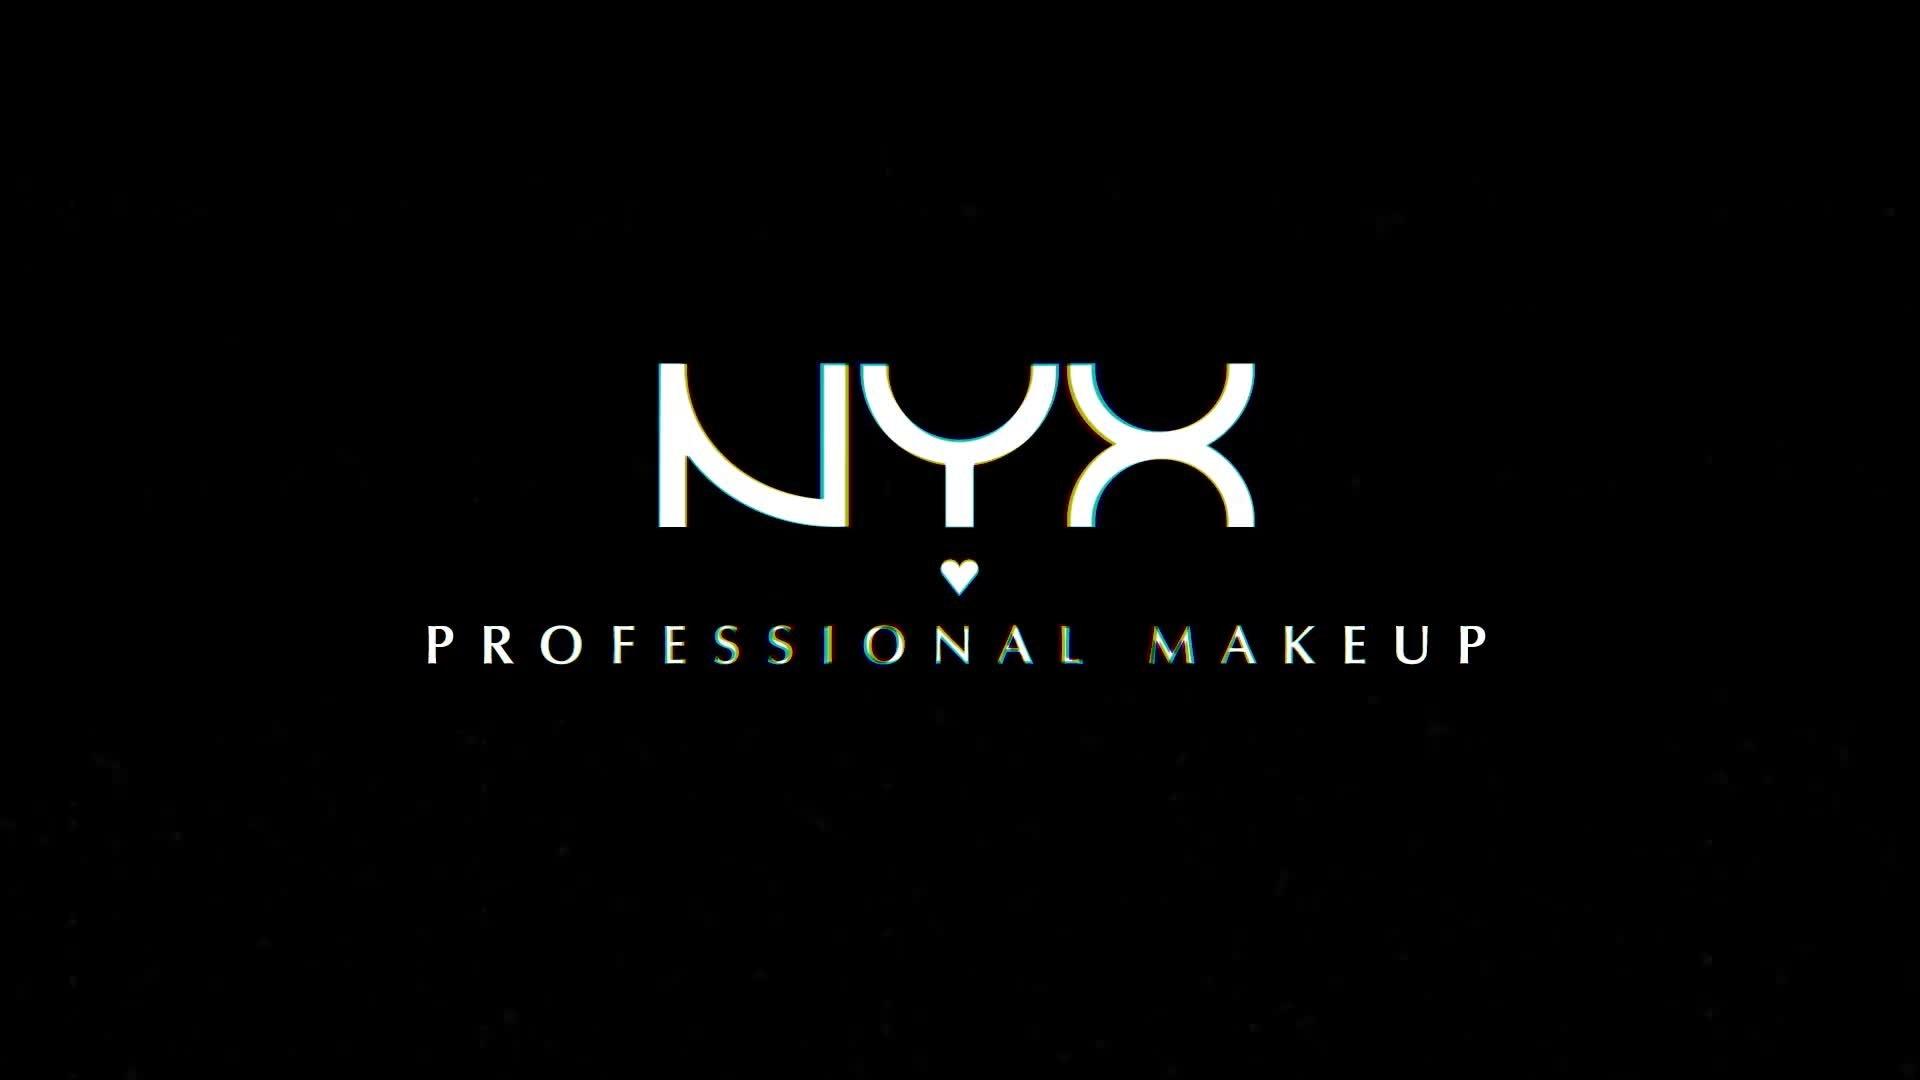 Can\'t Stop Won\'t Stop All Makeup Mattifying Day Ulta NYX Beauty Professional Powder - 